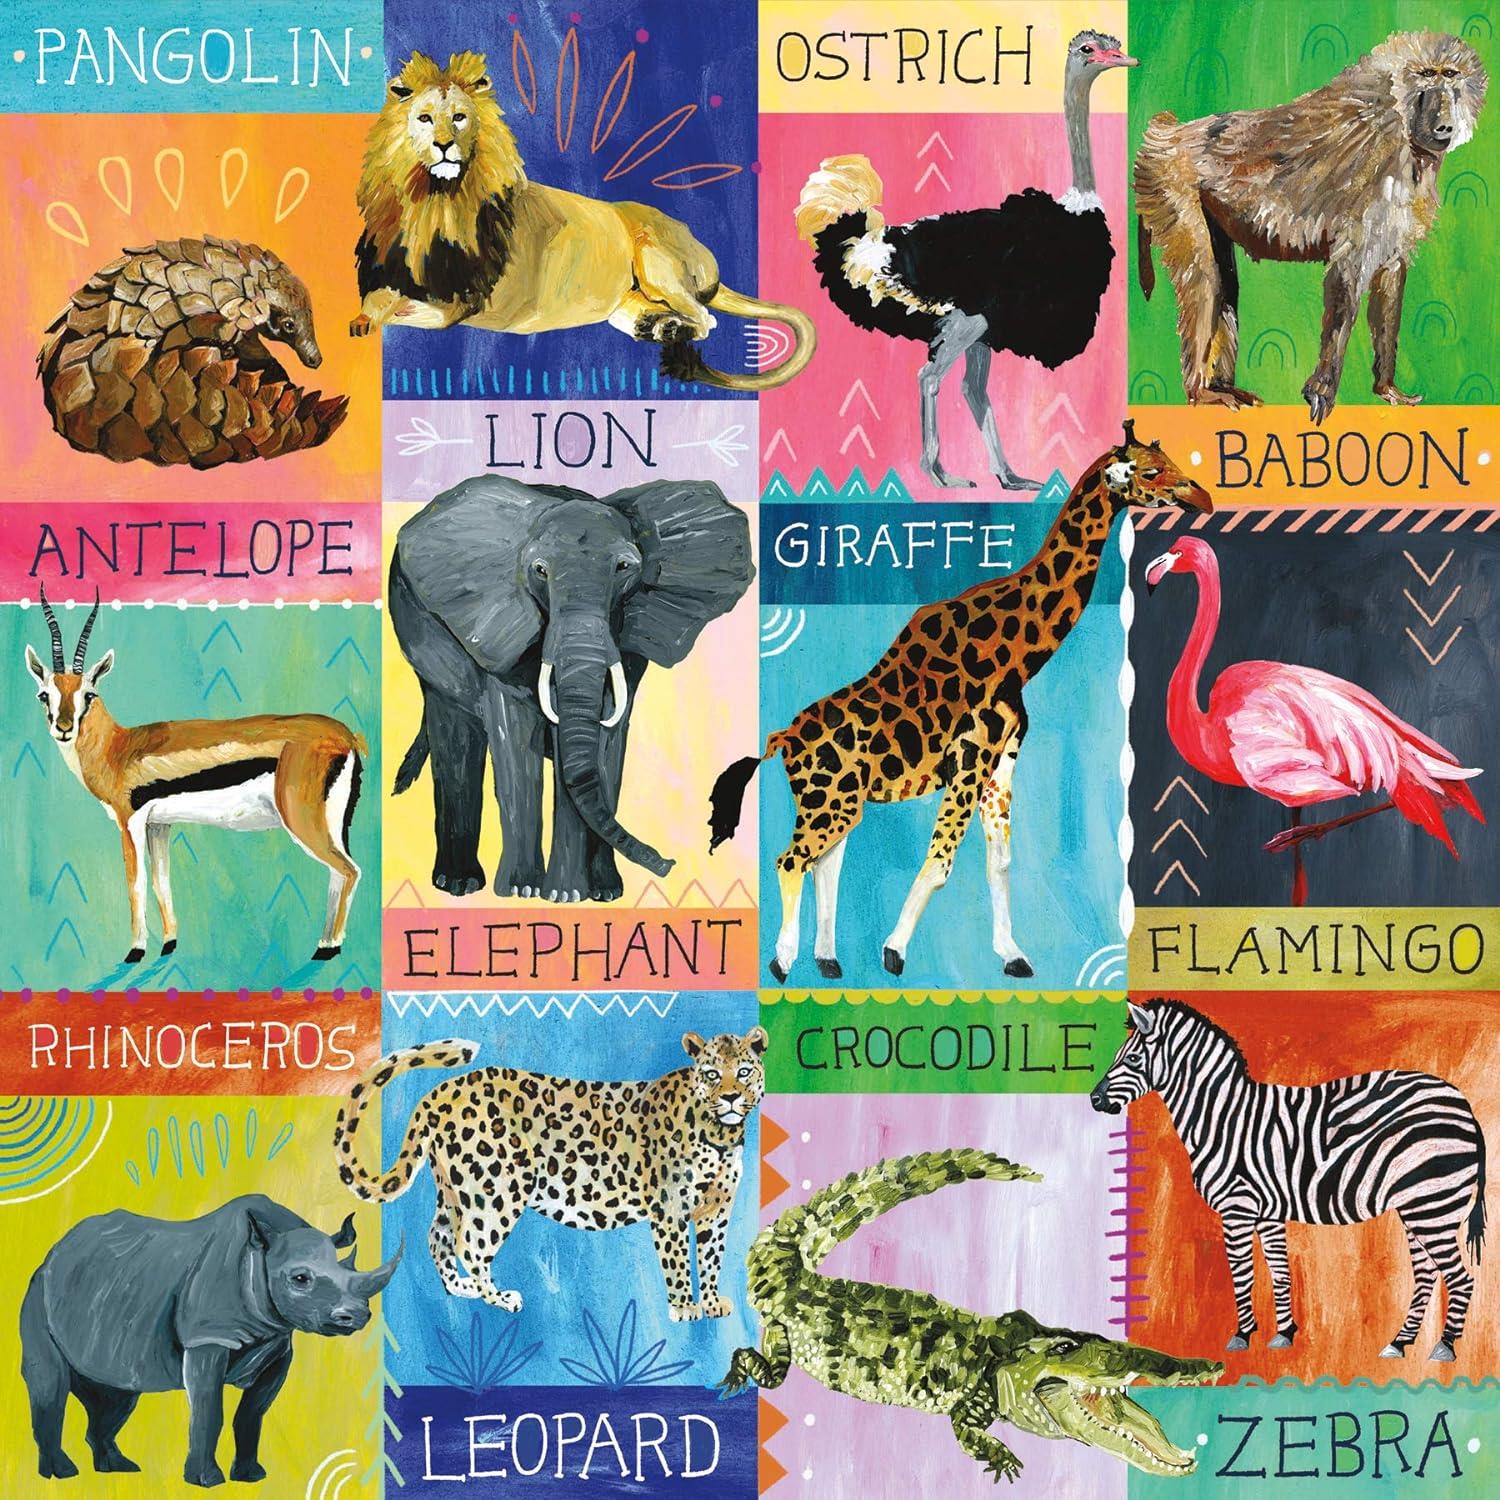 Galison Painted Safari Jigsaw Puzzle (500 Pieces)